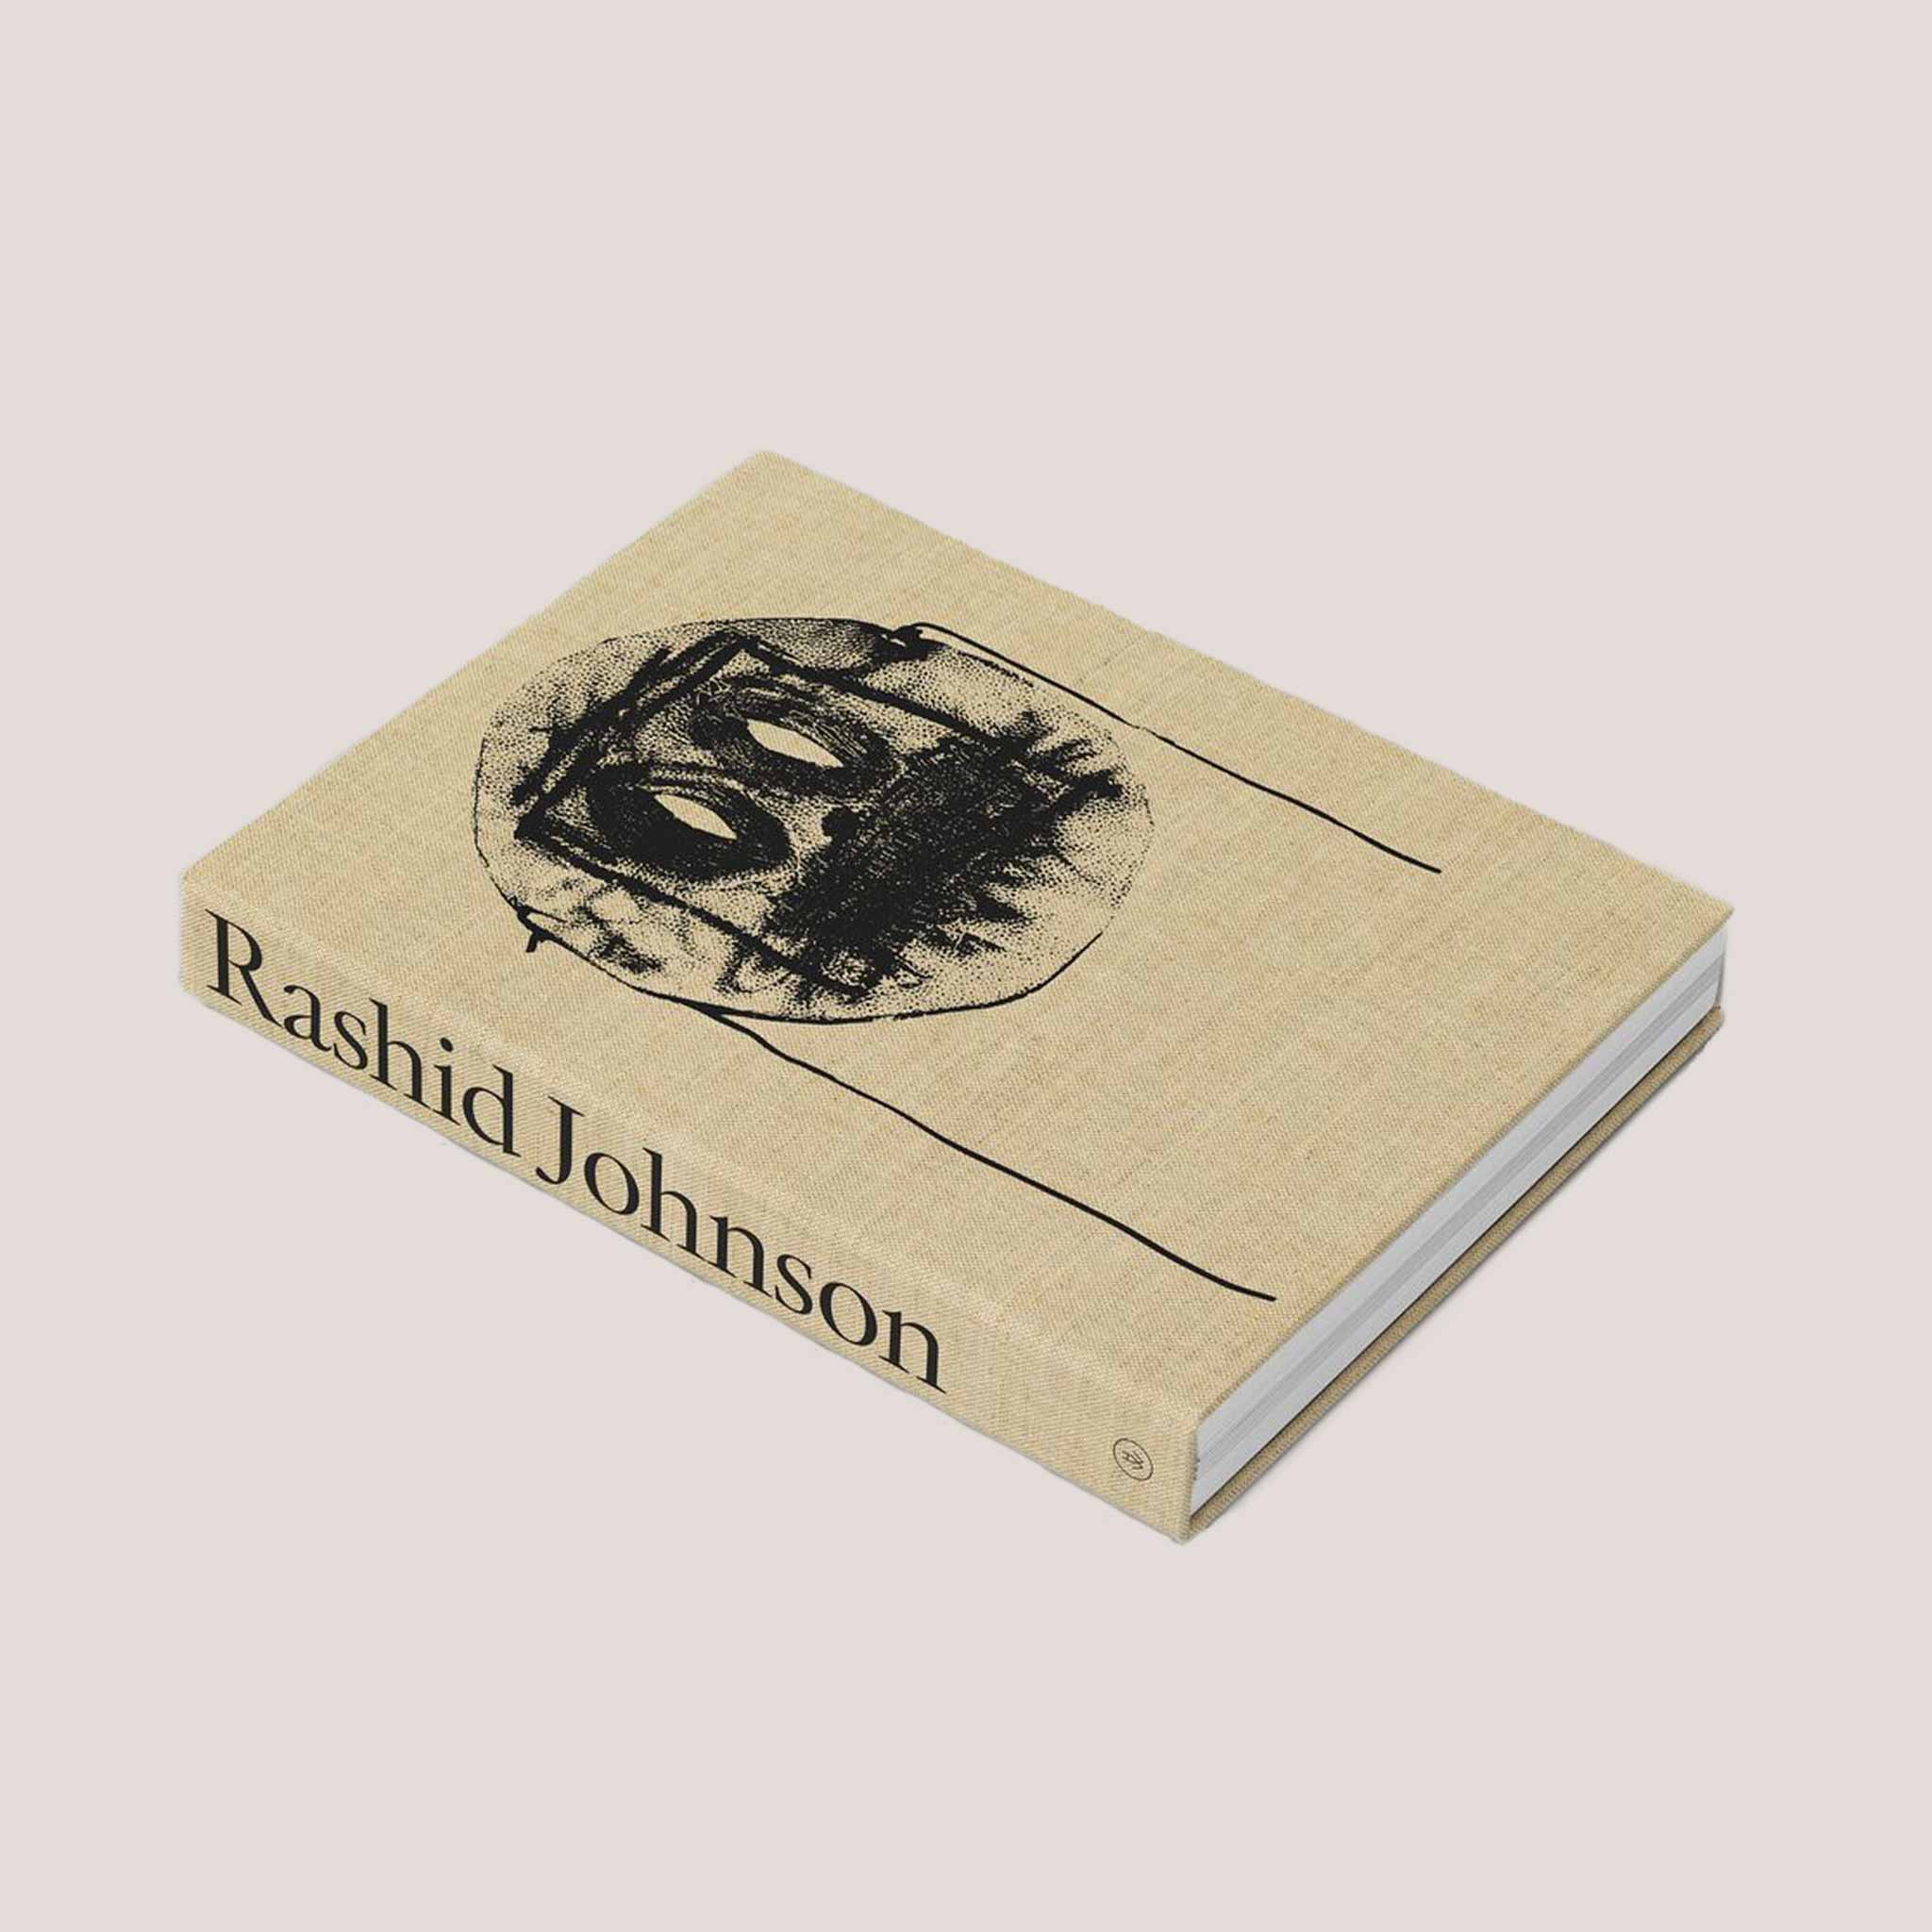 Angled photo showing the side binding of Rashid Johnson's book, Hikers.